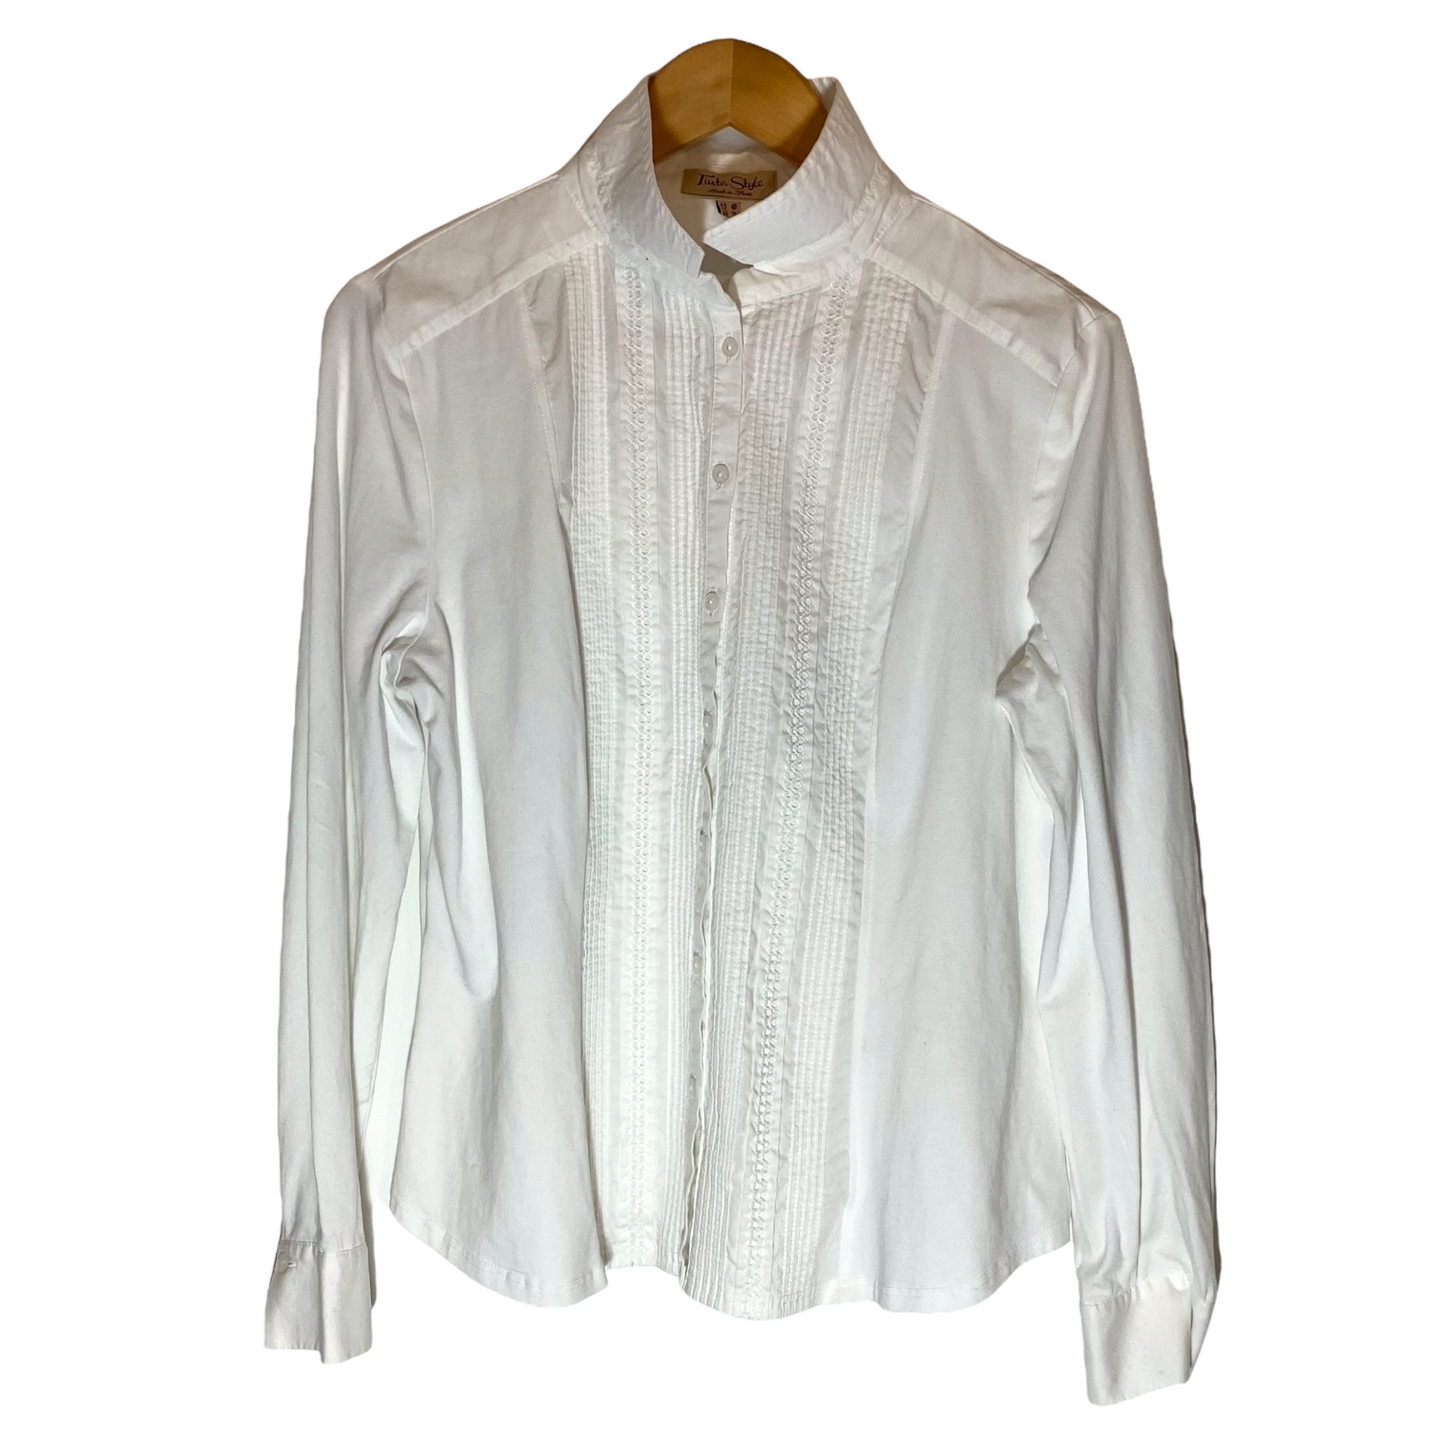 Soft Cotton Button Up ‘Tuxedo’ Shirt Size Medium